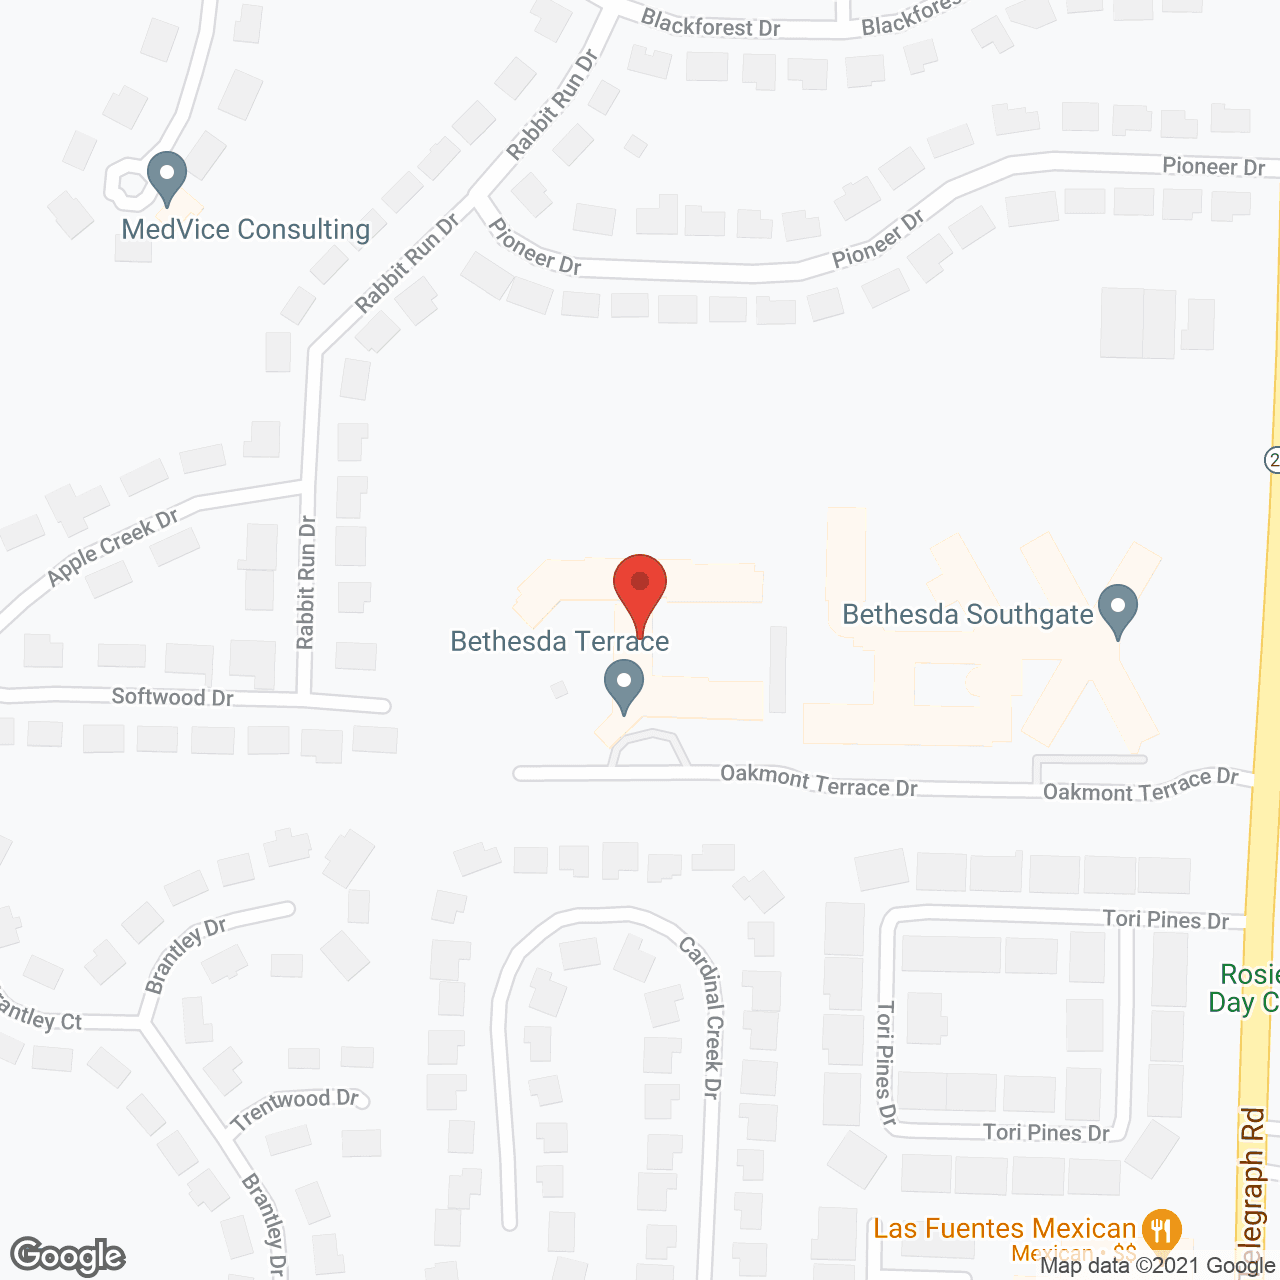 Bethesda Terrace in google map